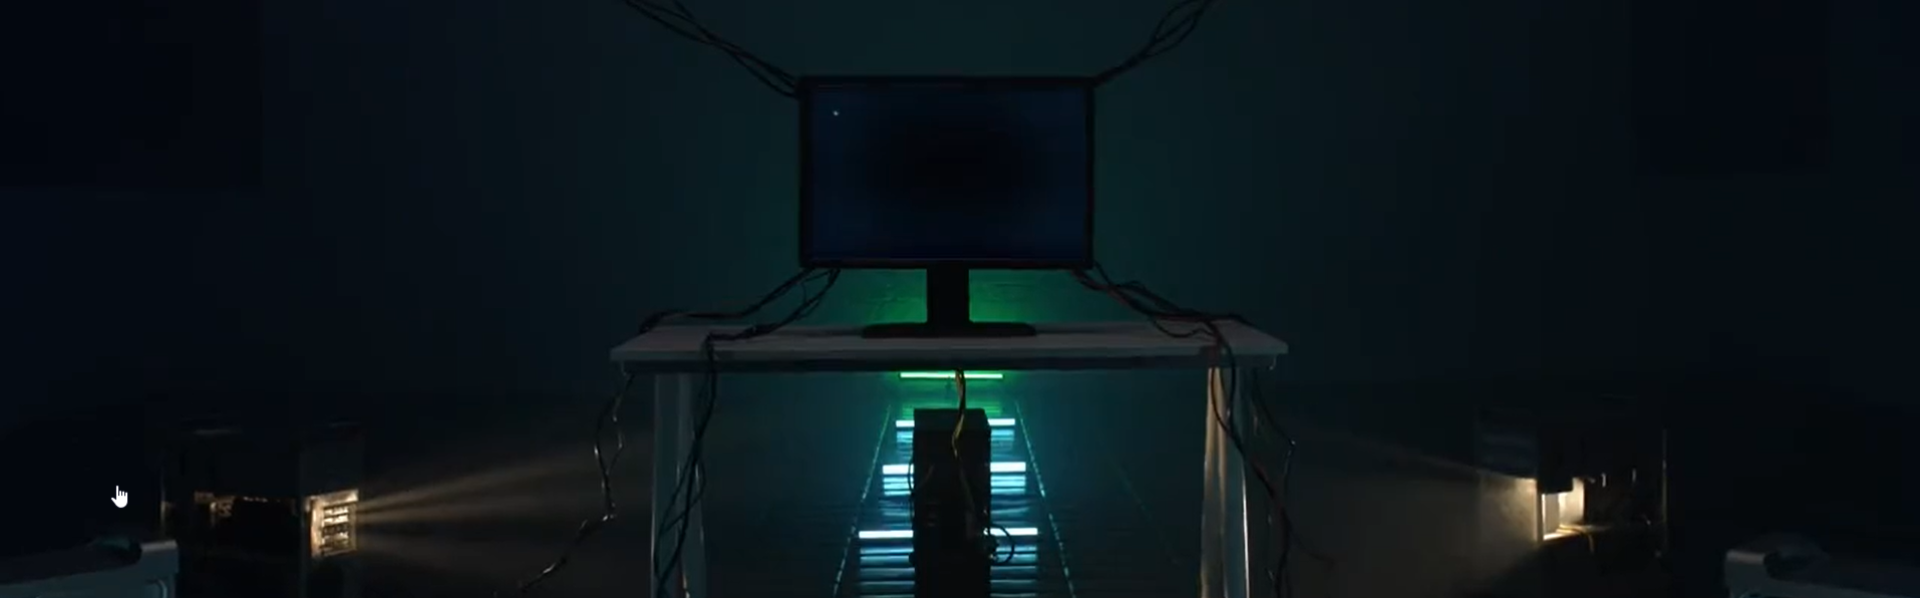 computer in donkere kamer